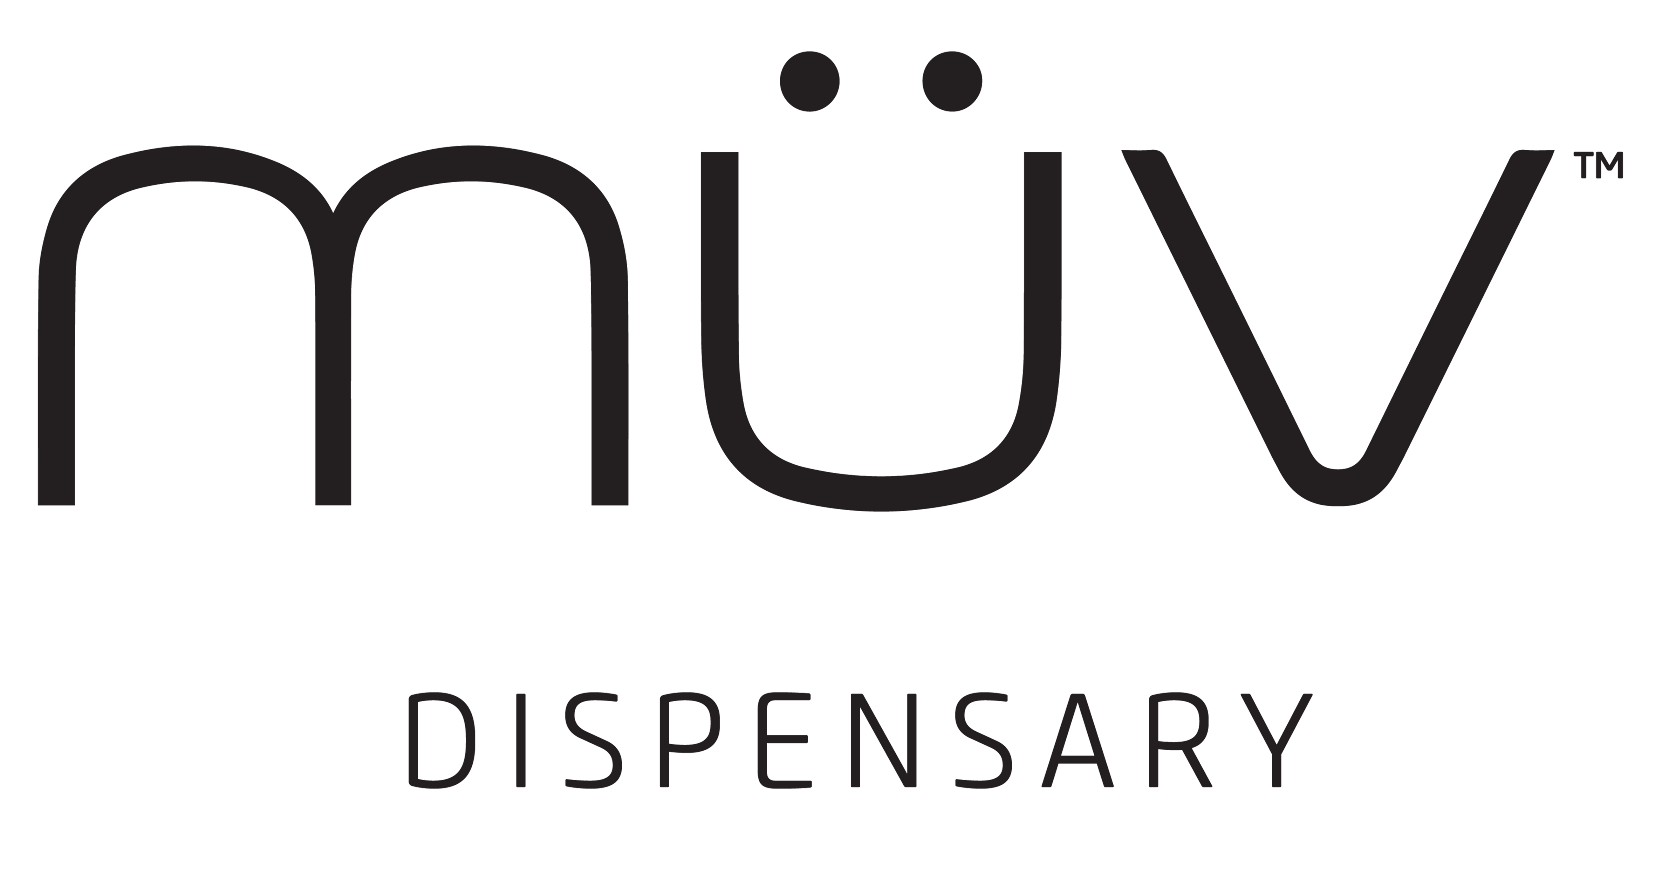 Verano-MUV logo